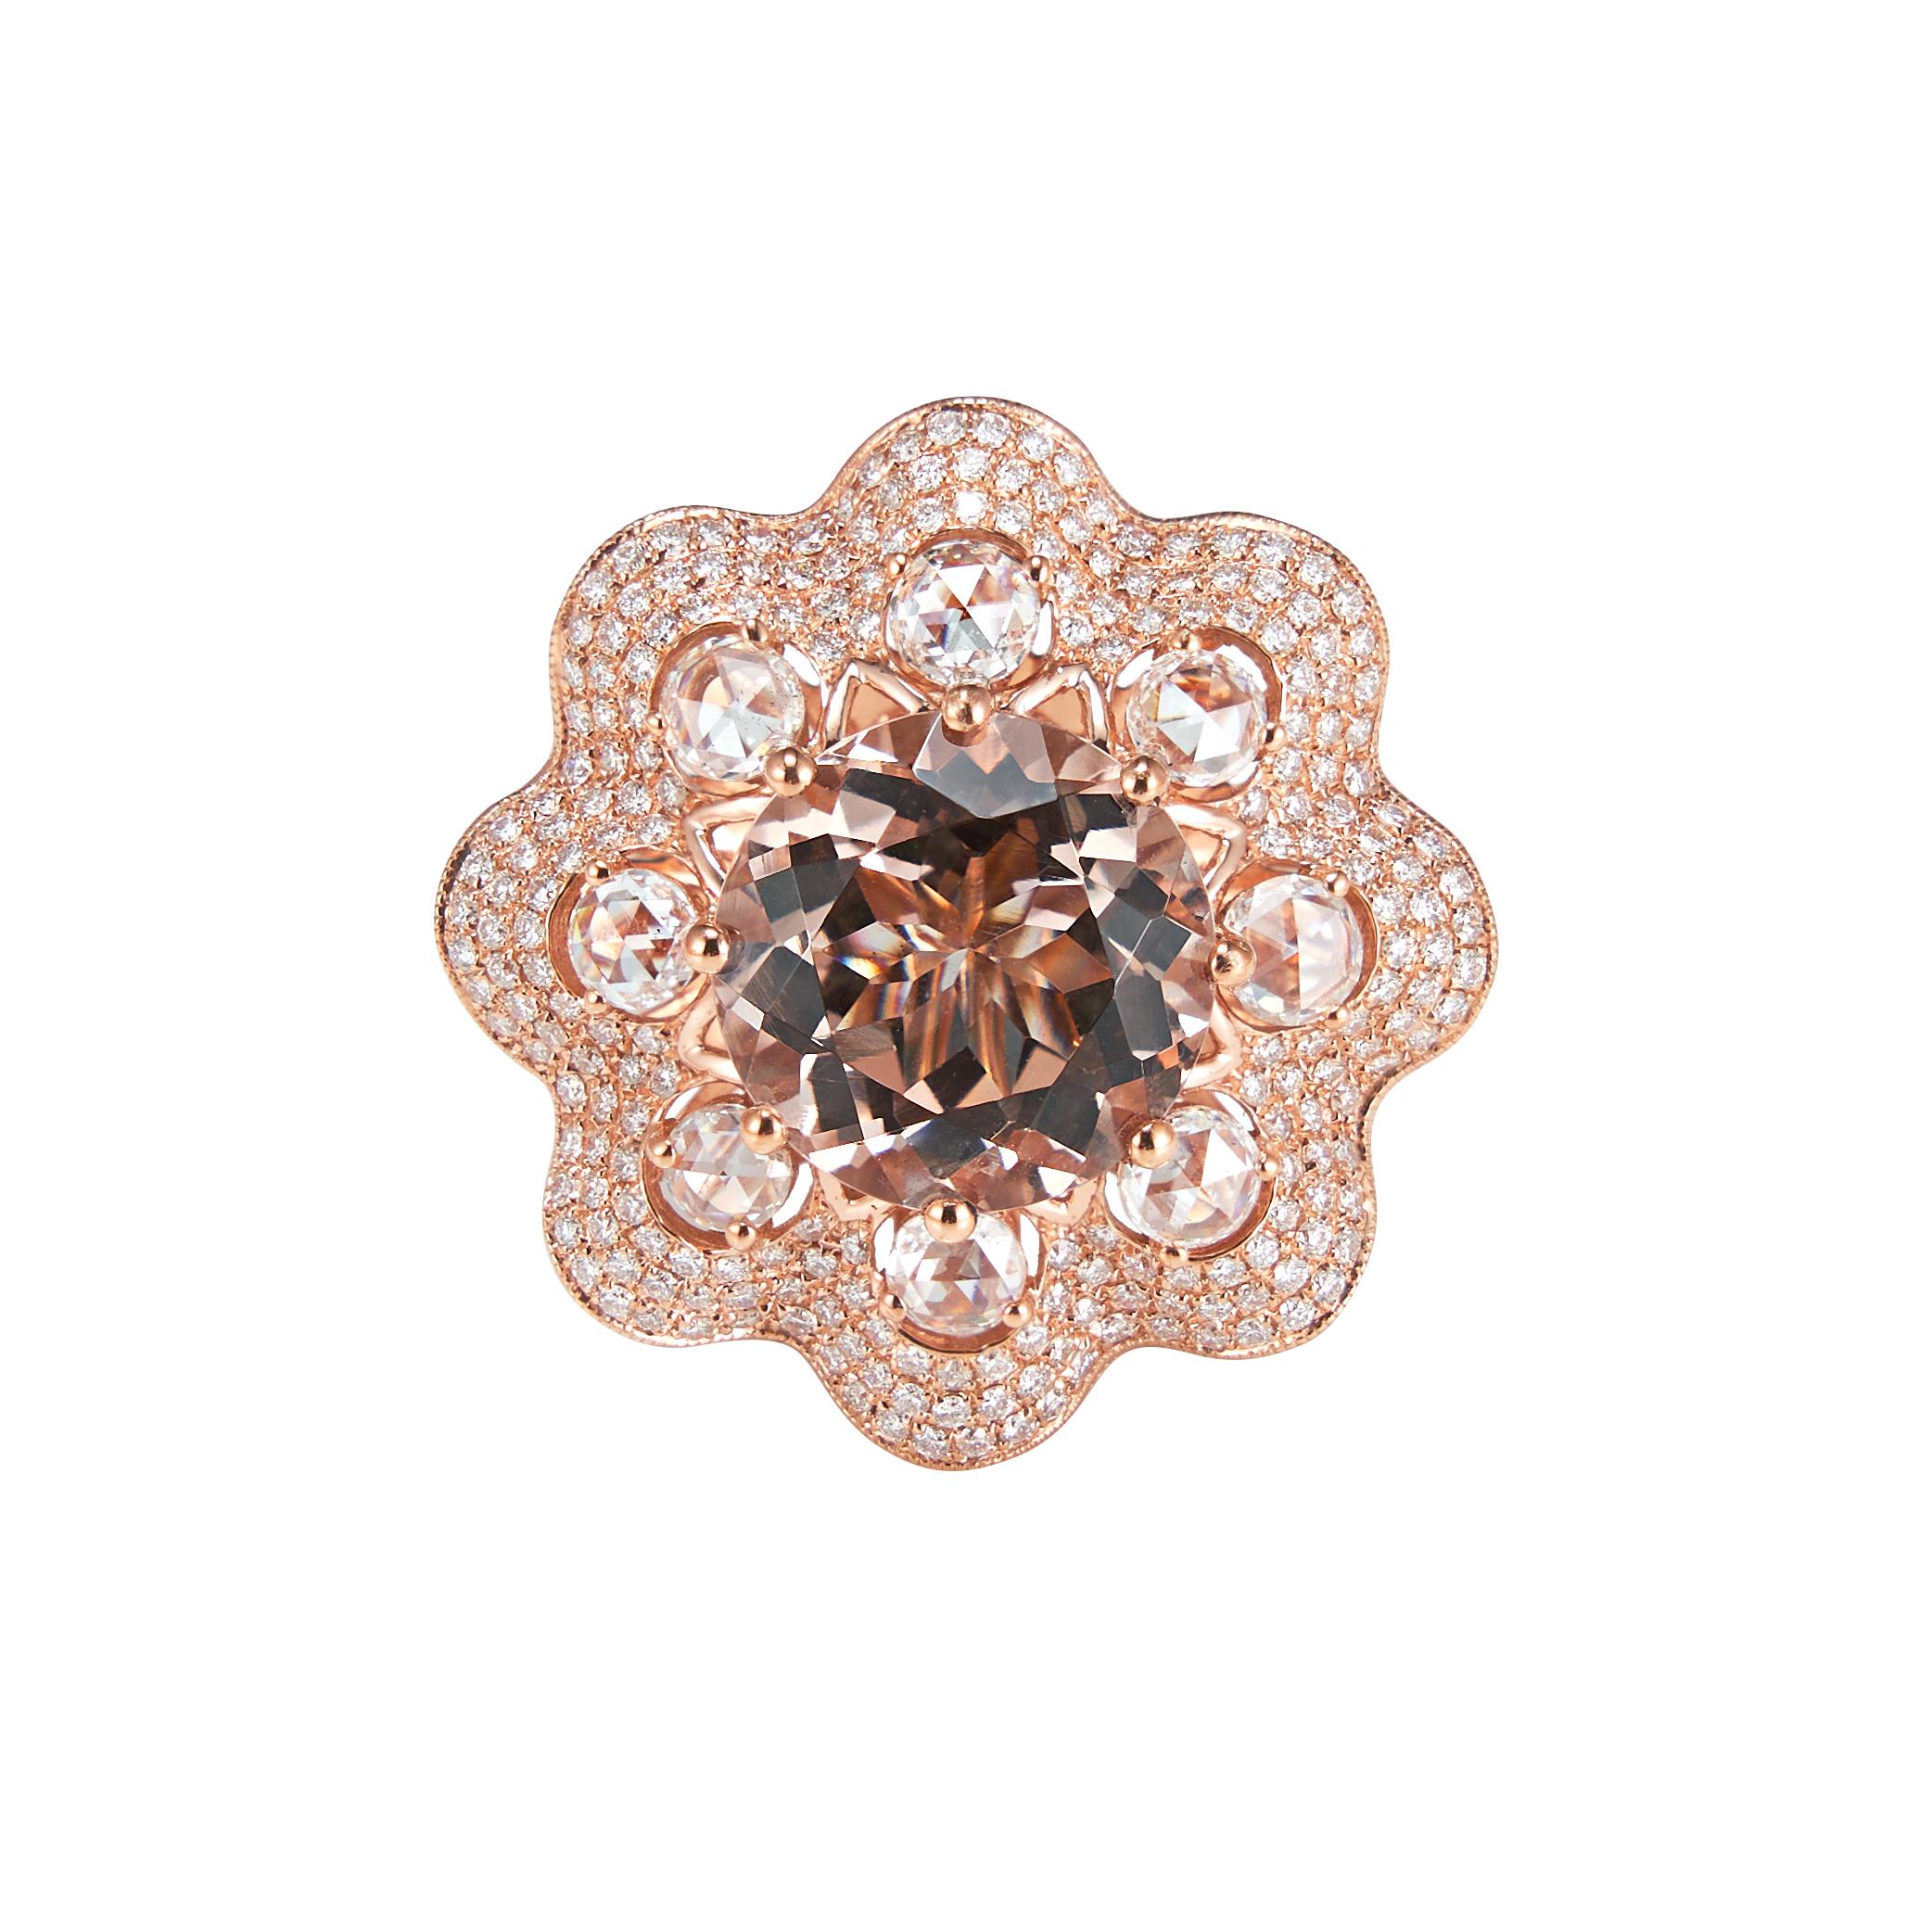 Contemporary 4.5 Carat Morganite and Rose Cut Diamond Ring in 18 Karat Rose Gold For Sale